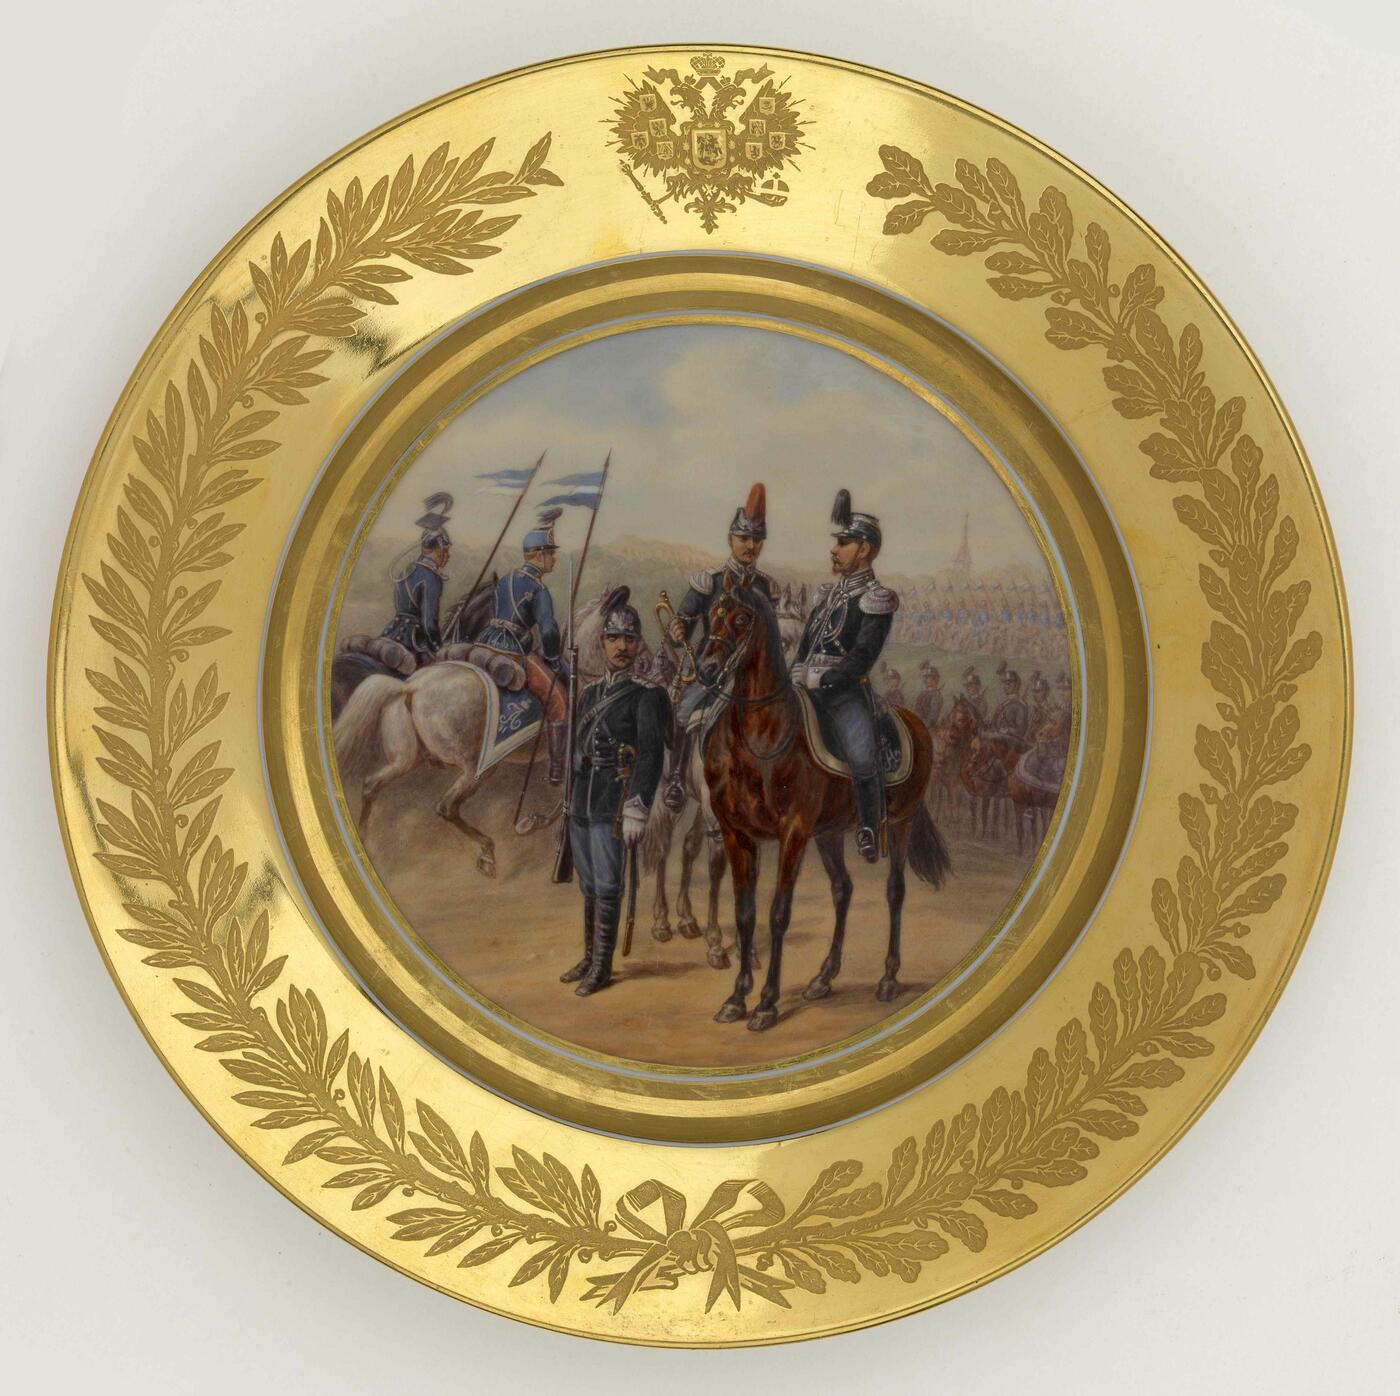 IMPERIAL PORCELAIN MANUFACTORY, ST PETERSBURG, PERIOD OF ALEXANDER III (1881-1894), DATED 1883